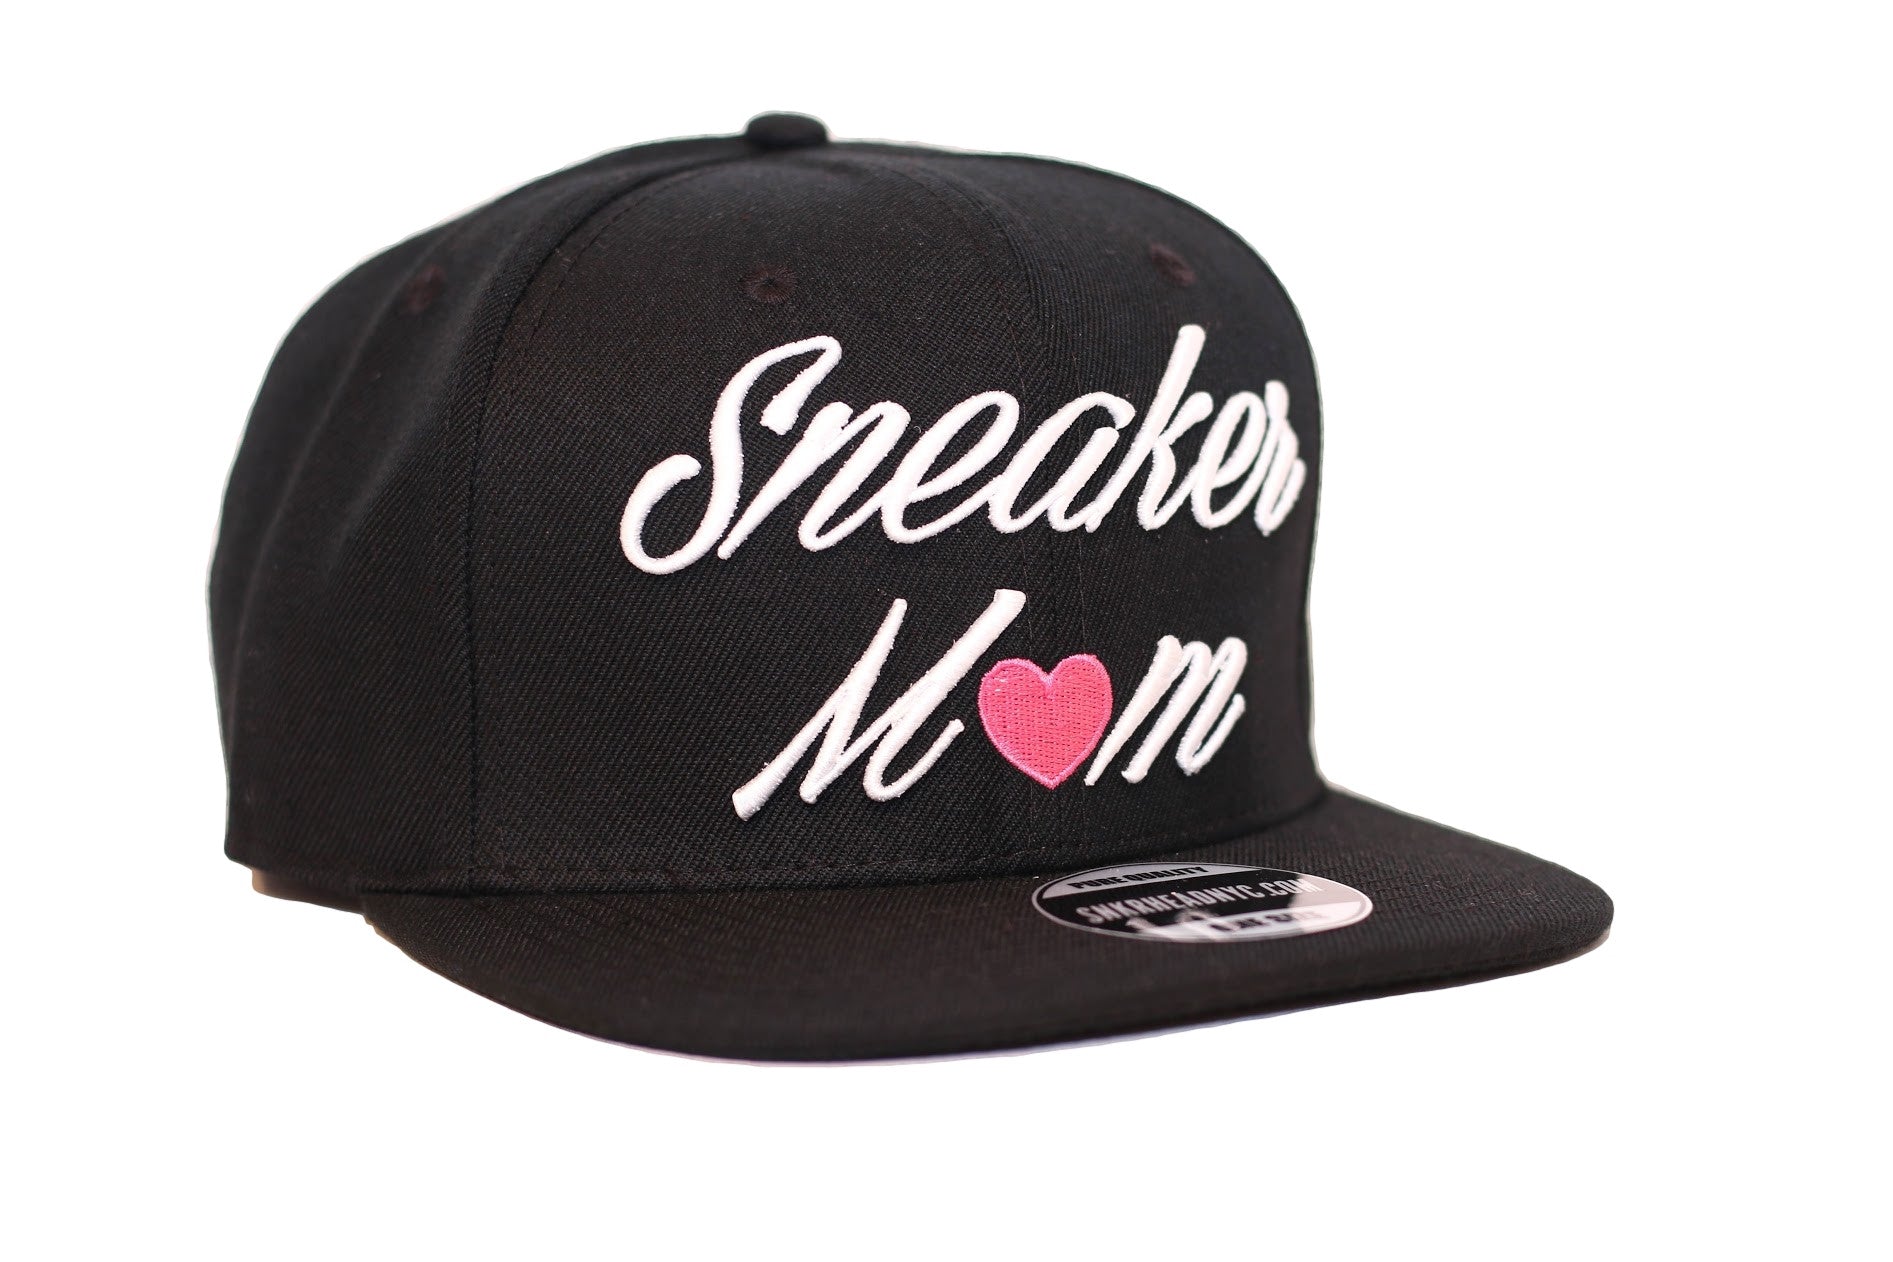 SNEAKER MOM Snapback Hat